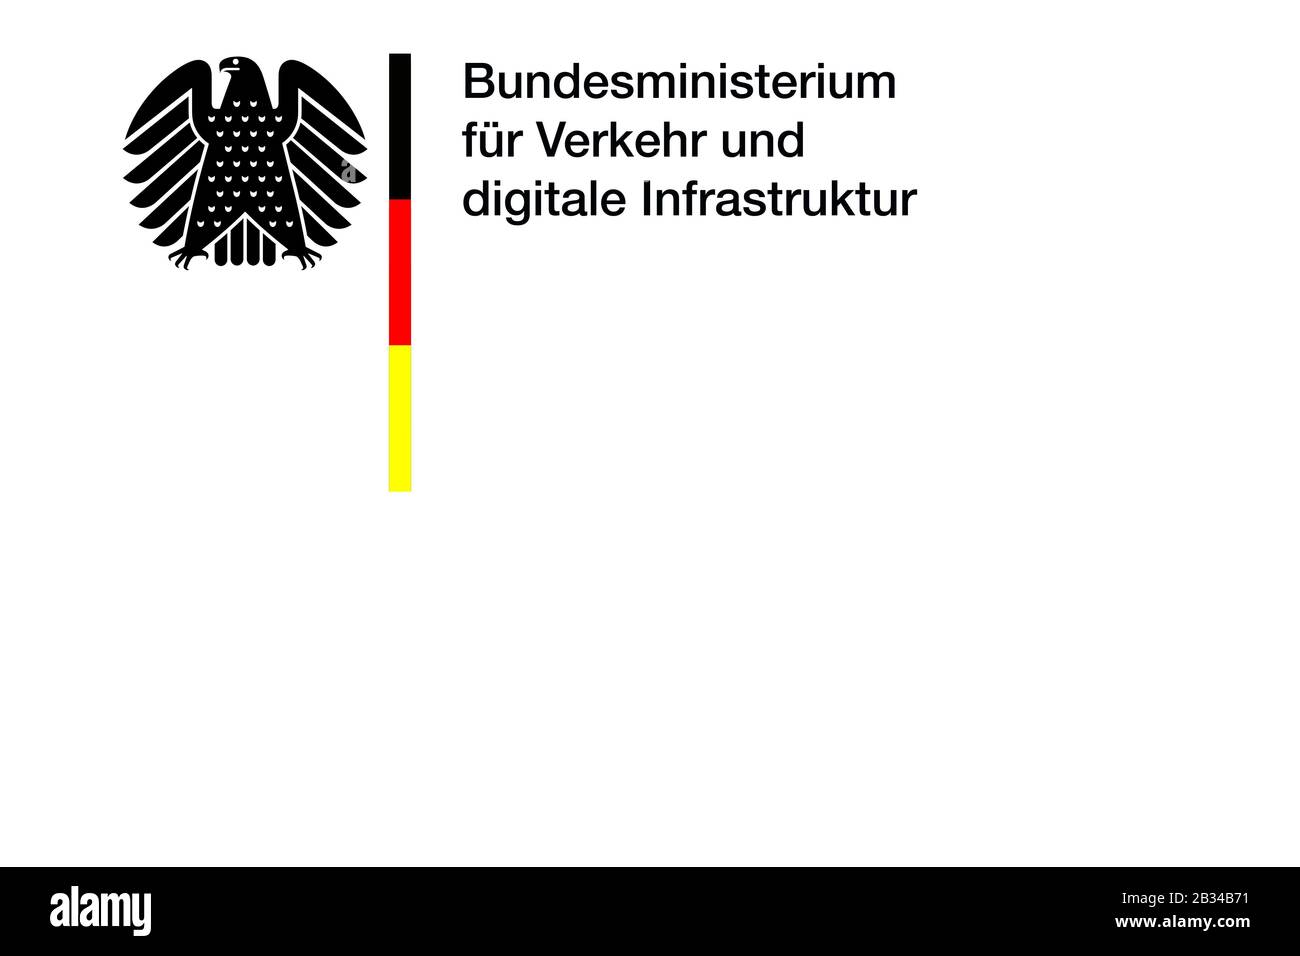 Bundesministerium fuer Verkehr und digitale Infrastruktur, Federal Ministry of Transport and Digital Infrastructure, letterhead, Germany Stock Photo